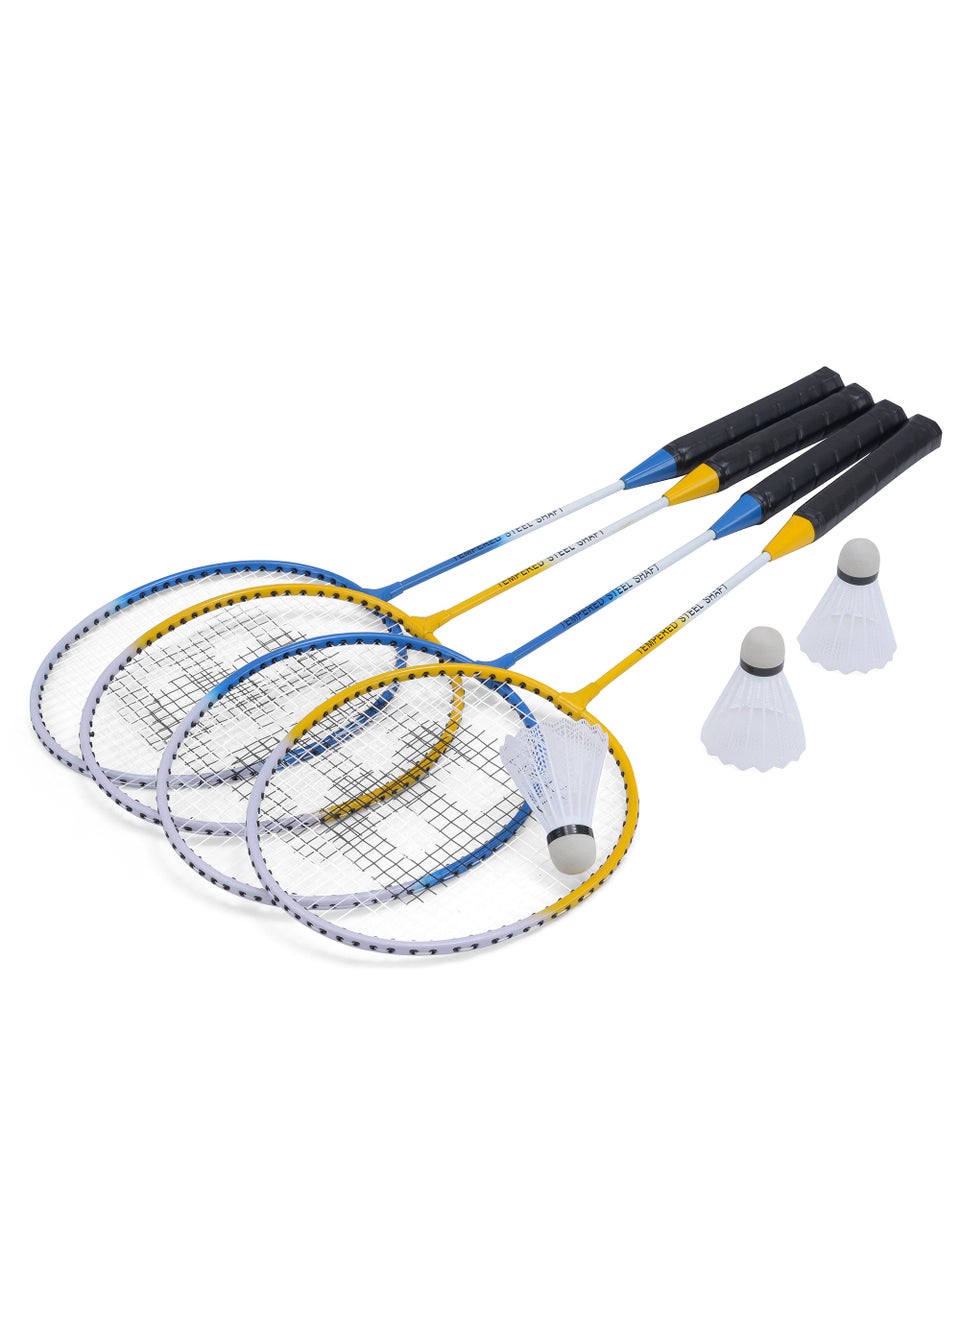 Sportline 4 Player Pro Badminton Set